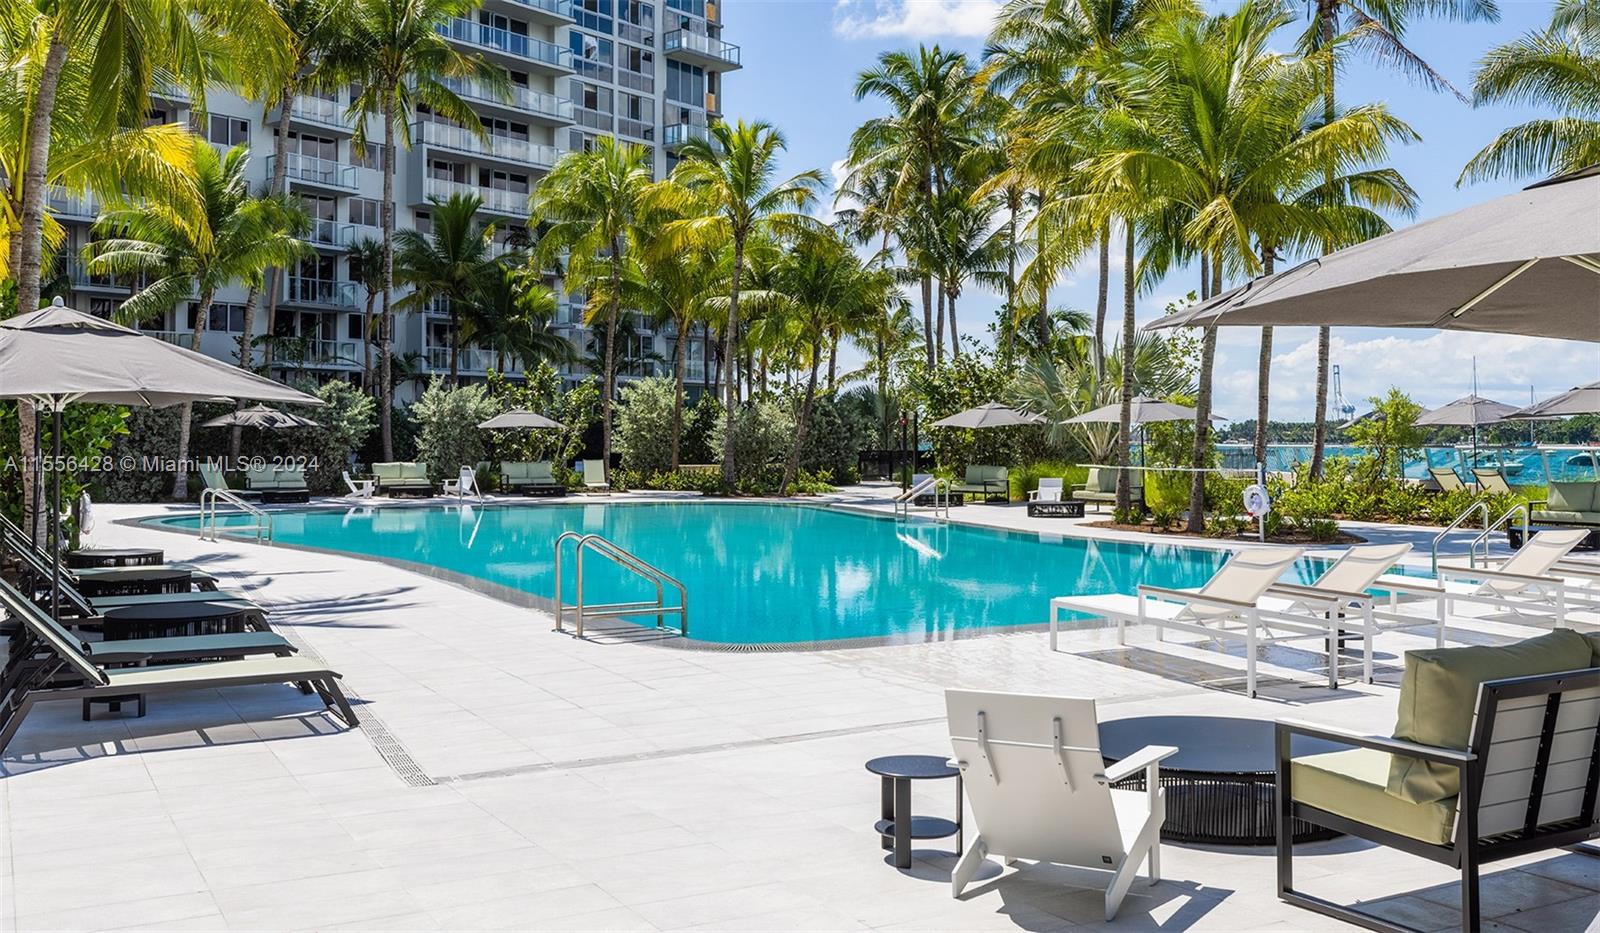 Rental Property at 1500 Bay Rd N-1229, Miami Beach, Miami-Dade County, Florida - Bedrooms: 3 
Bathrooms: 3  - $7,976 MO.